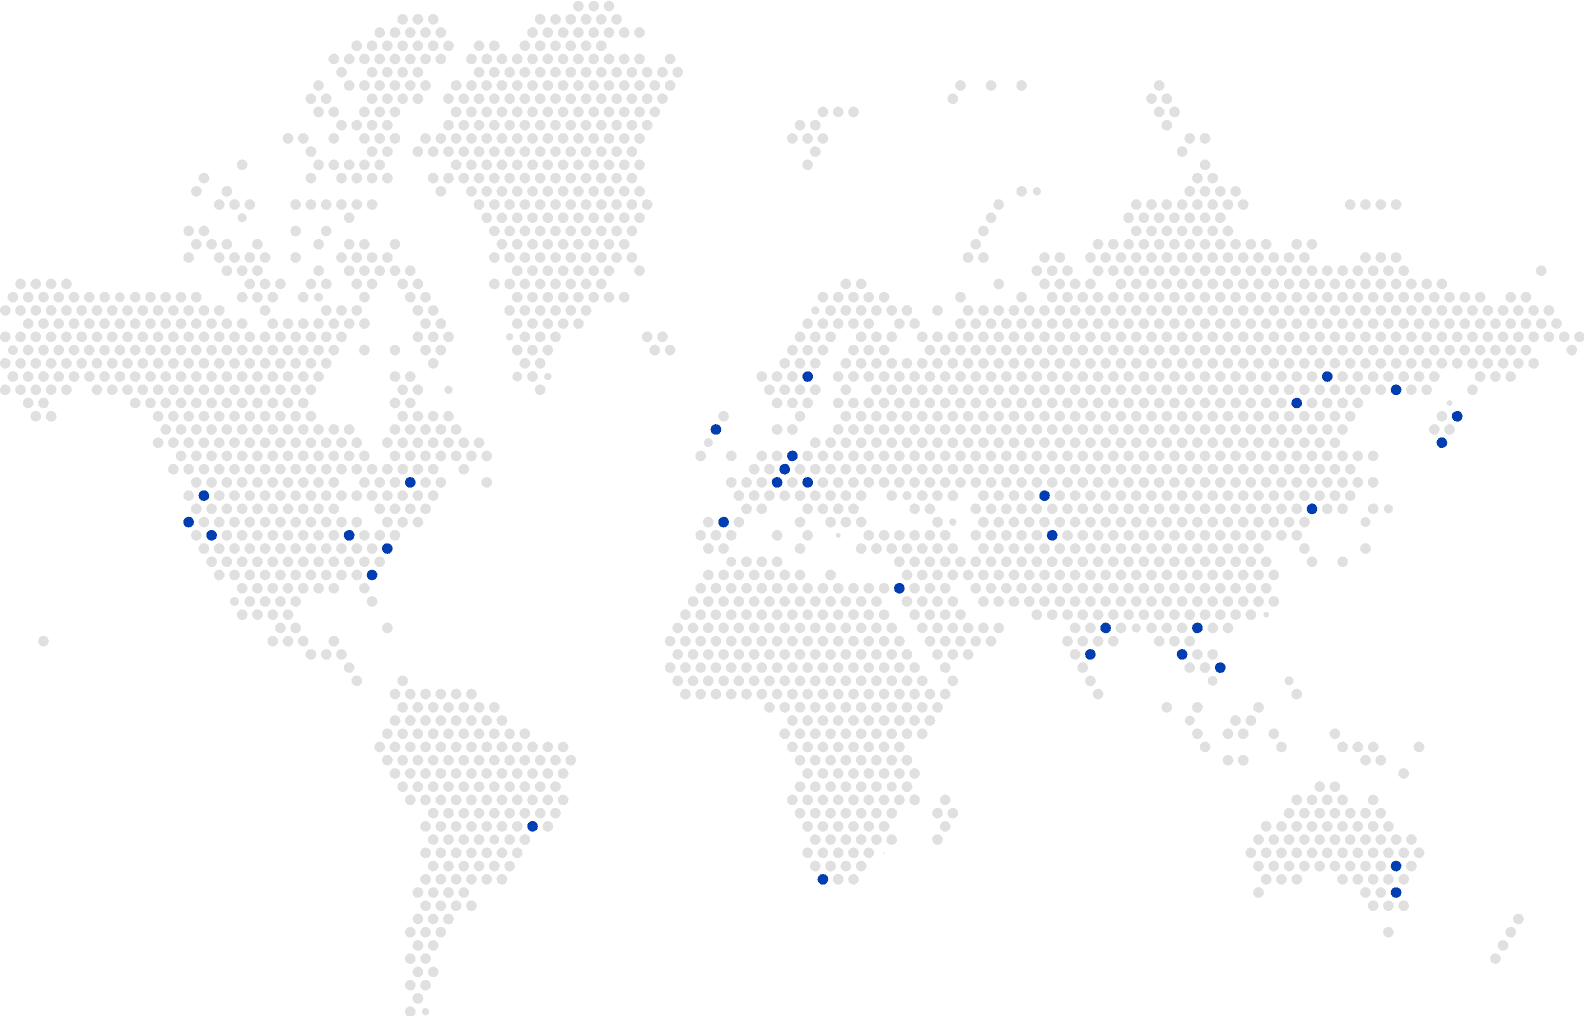 A worldmap showing edge locations